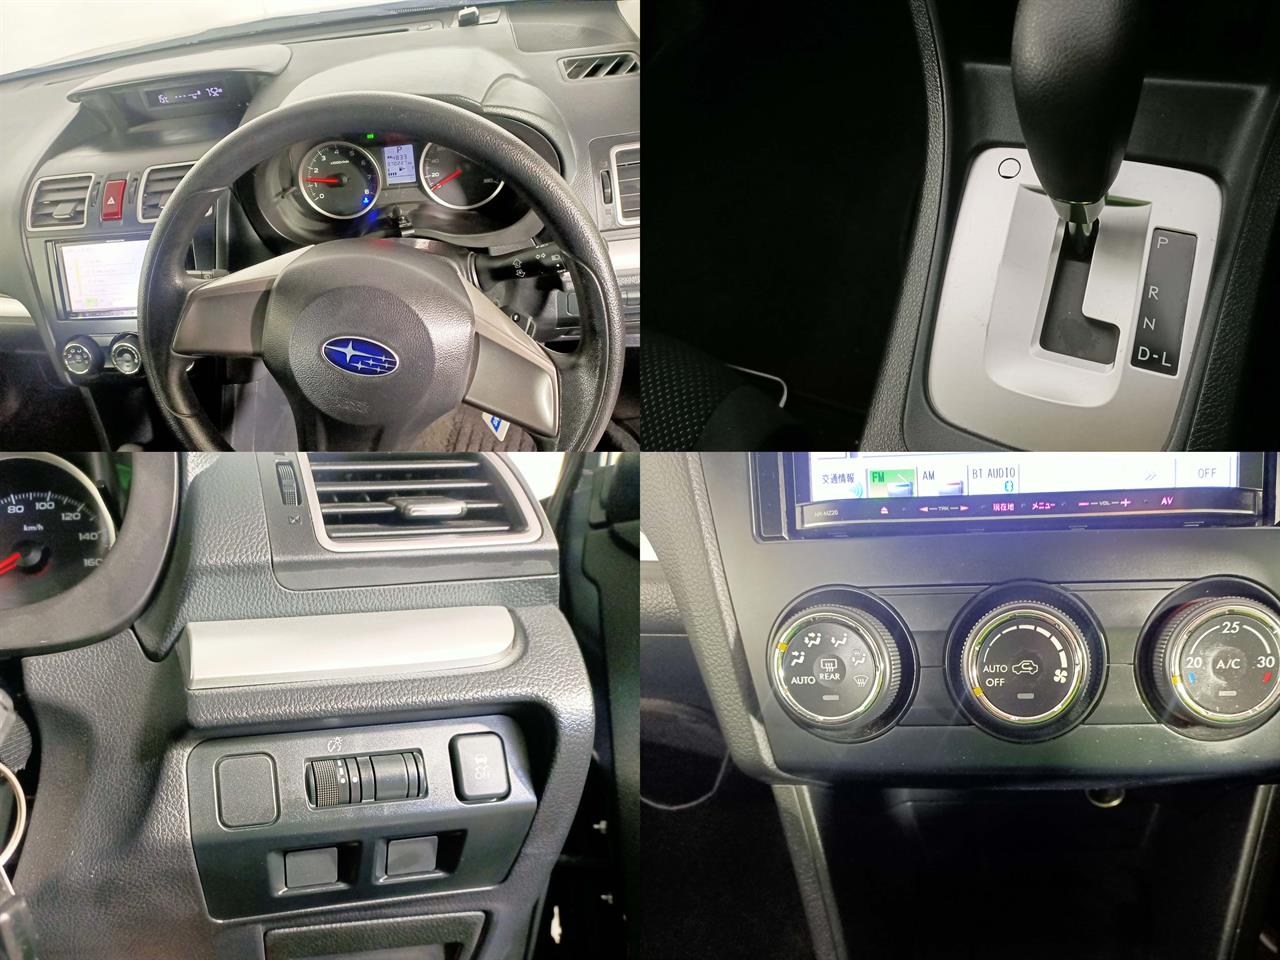 2015 Subaru Impreza G4